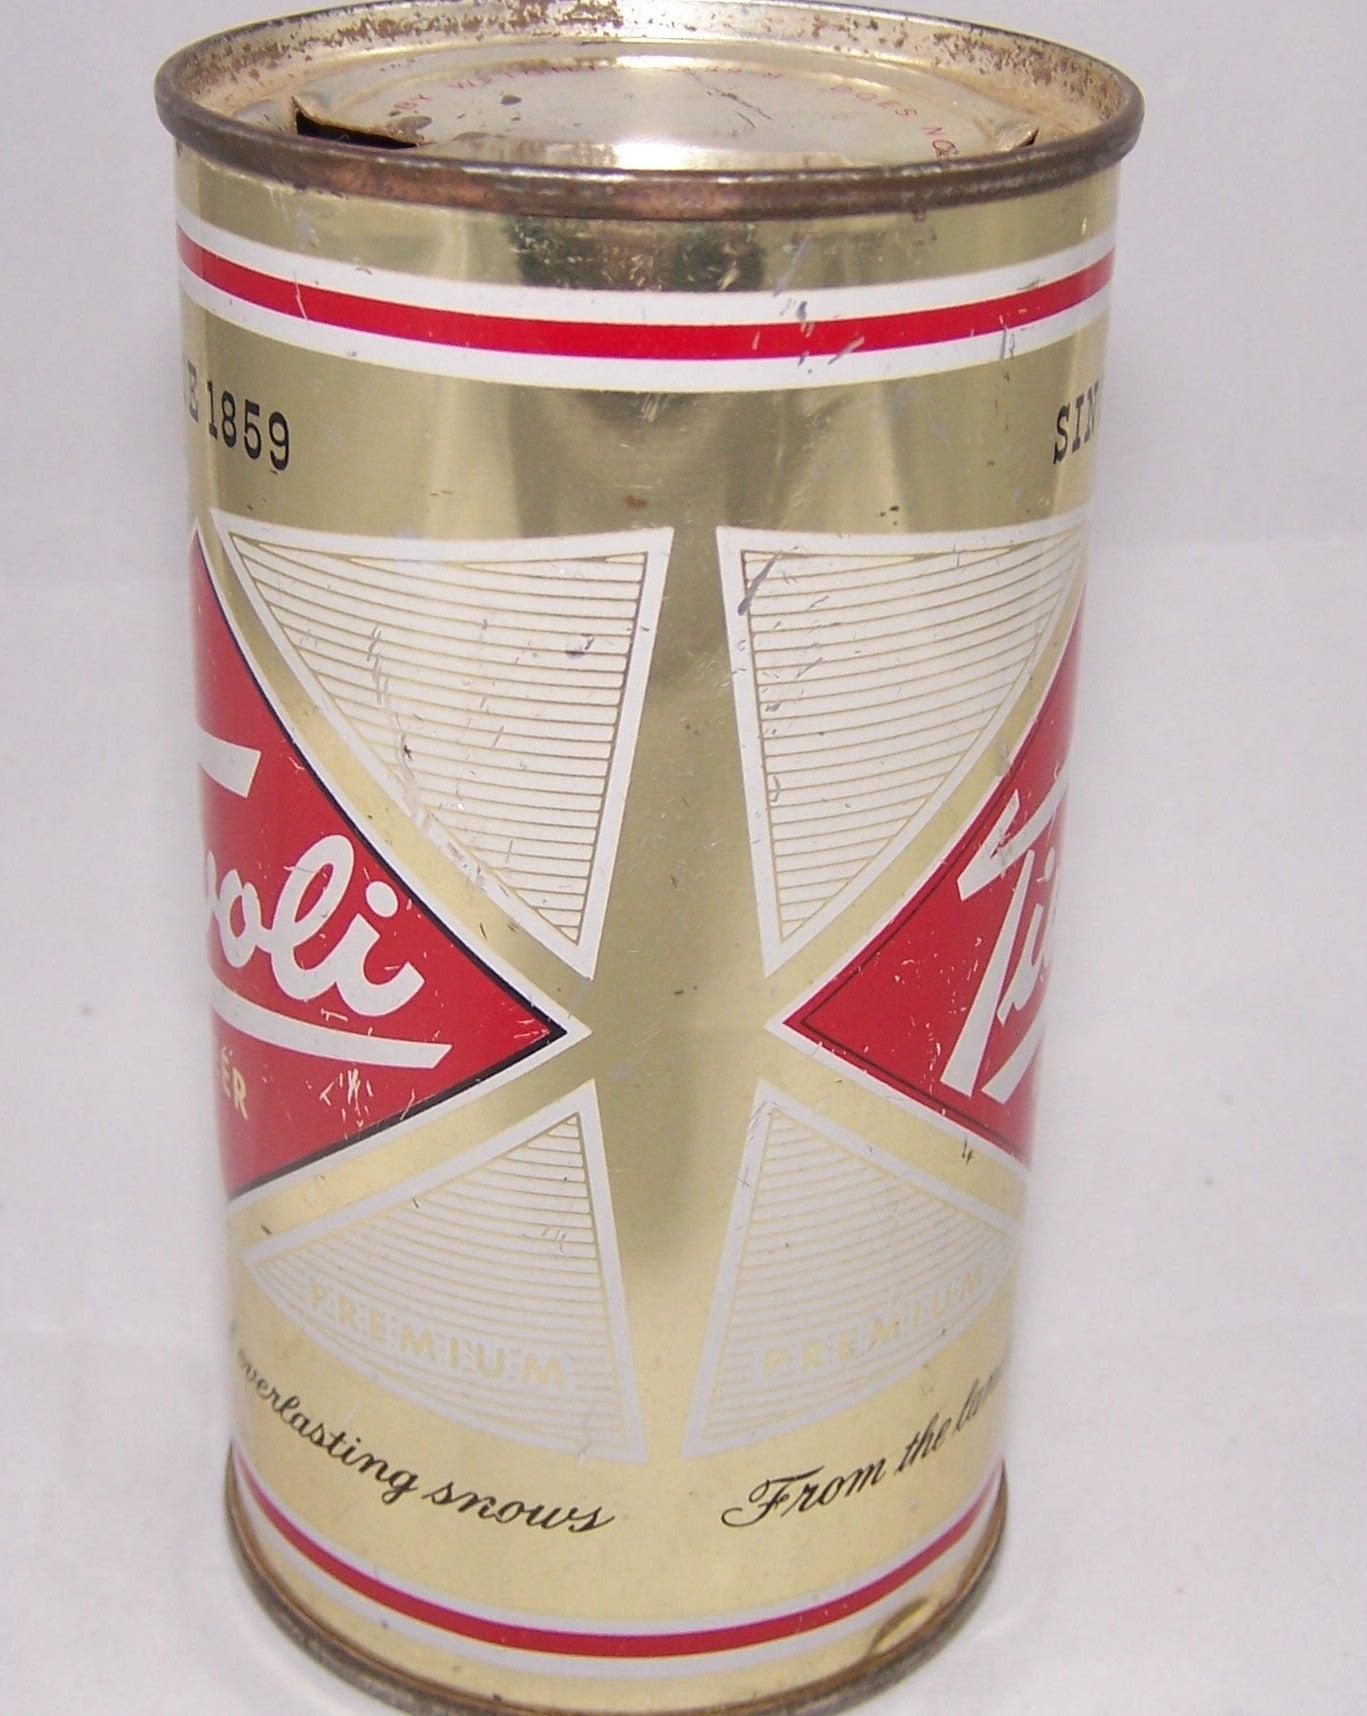 Tivoli Beer, USBC 138-38, Grade 1/1- Sold on 08/09/16